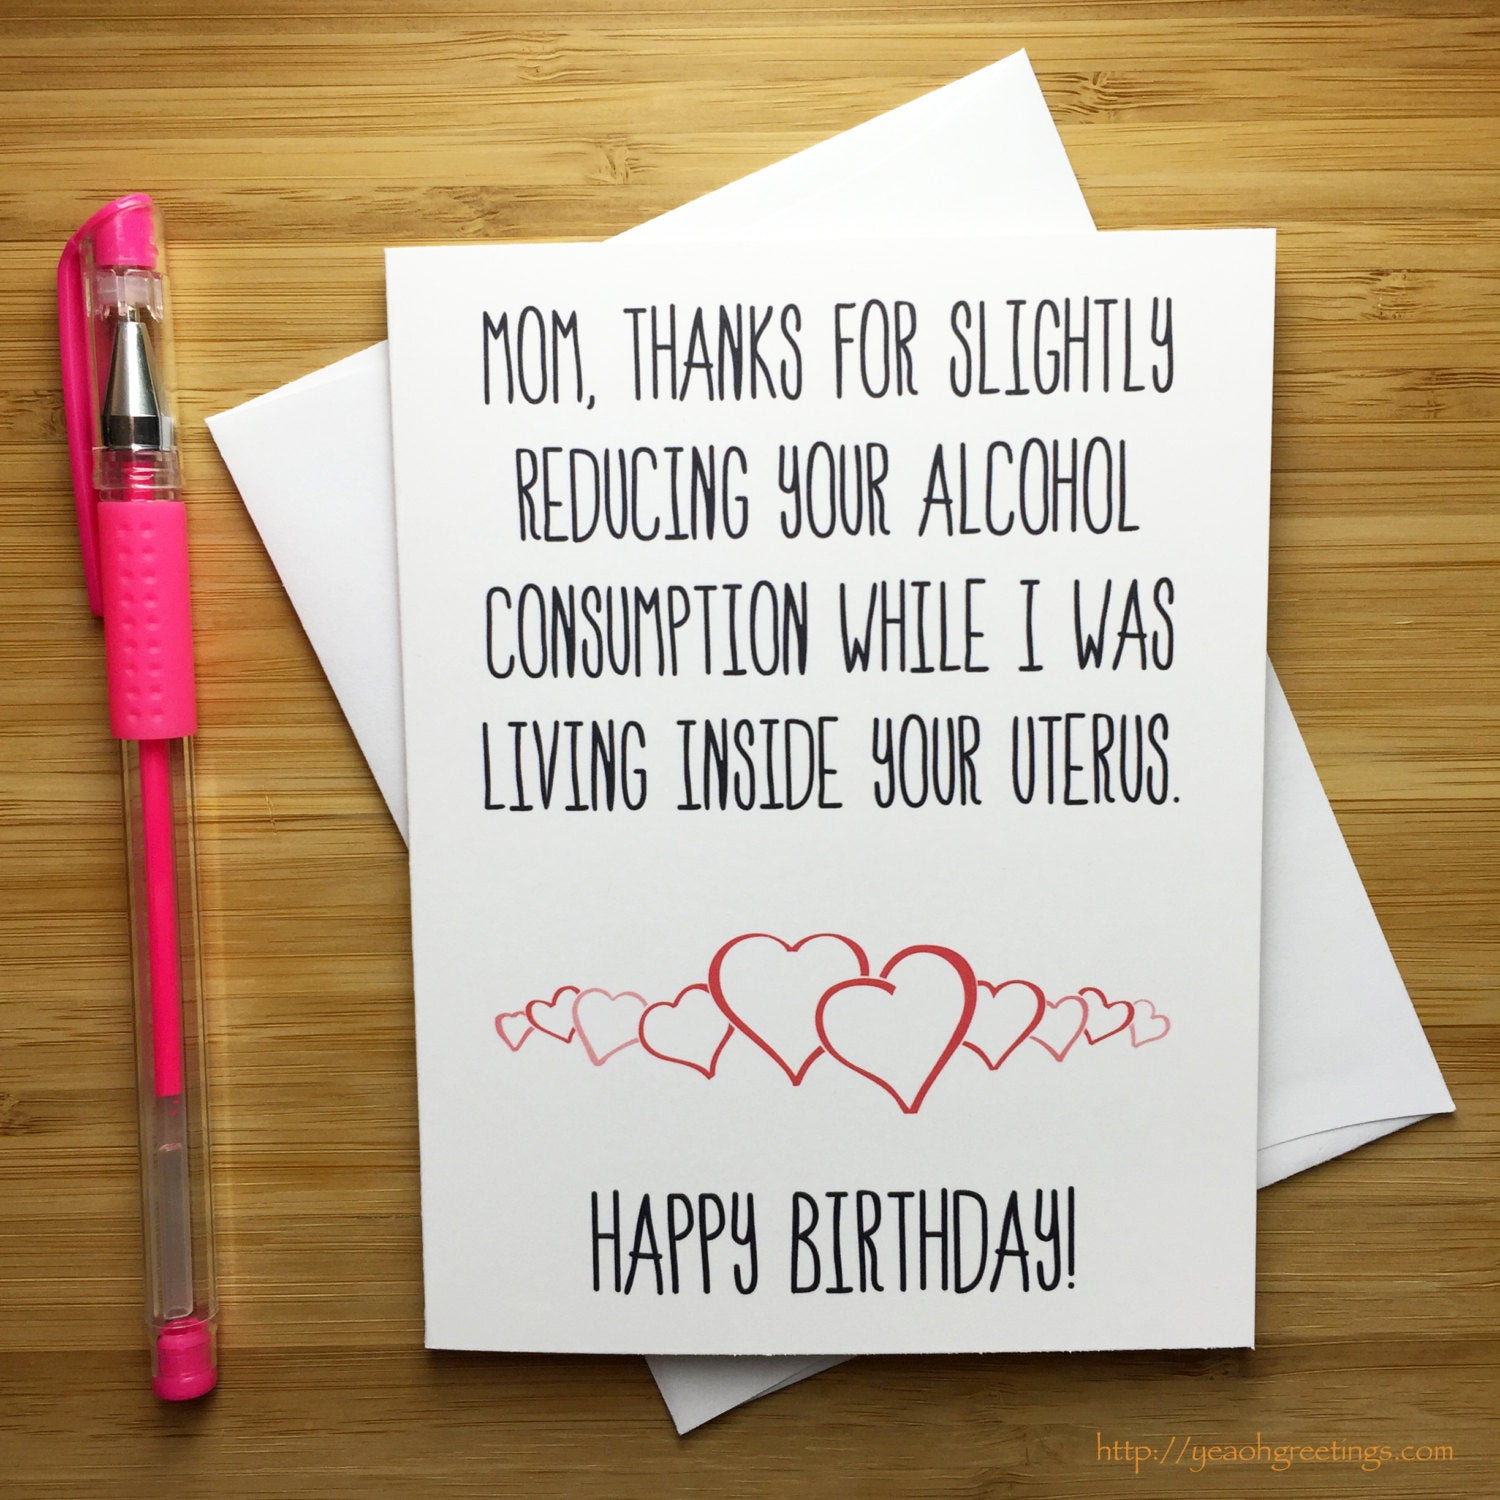 Best ideas about Funny Birthday Card Ideas
. Save or Pin Mother Birthday Card Bday Card Mum Funny Birthday Card Now.